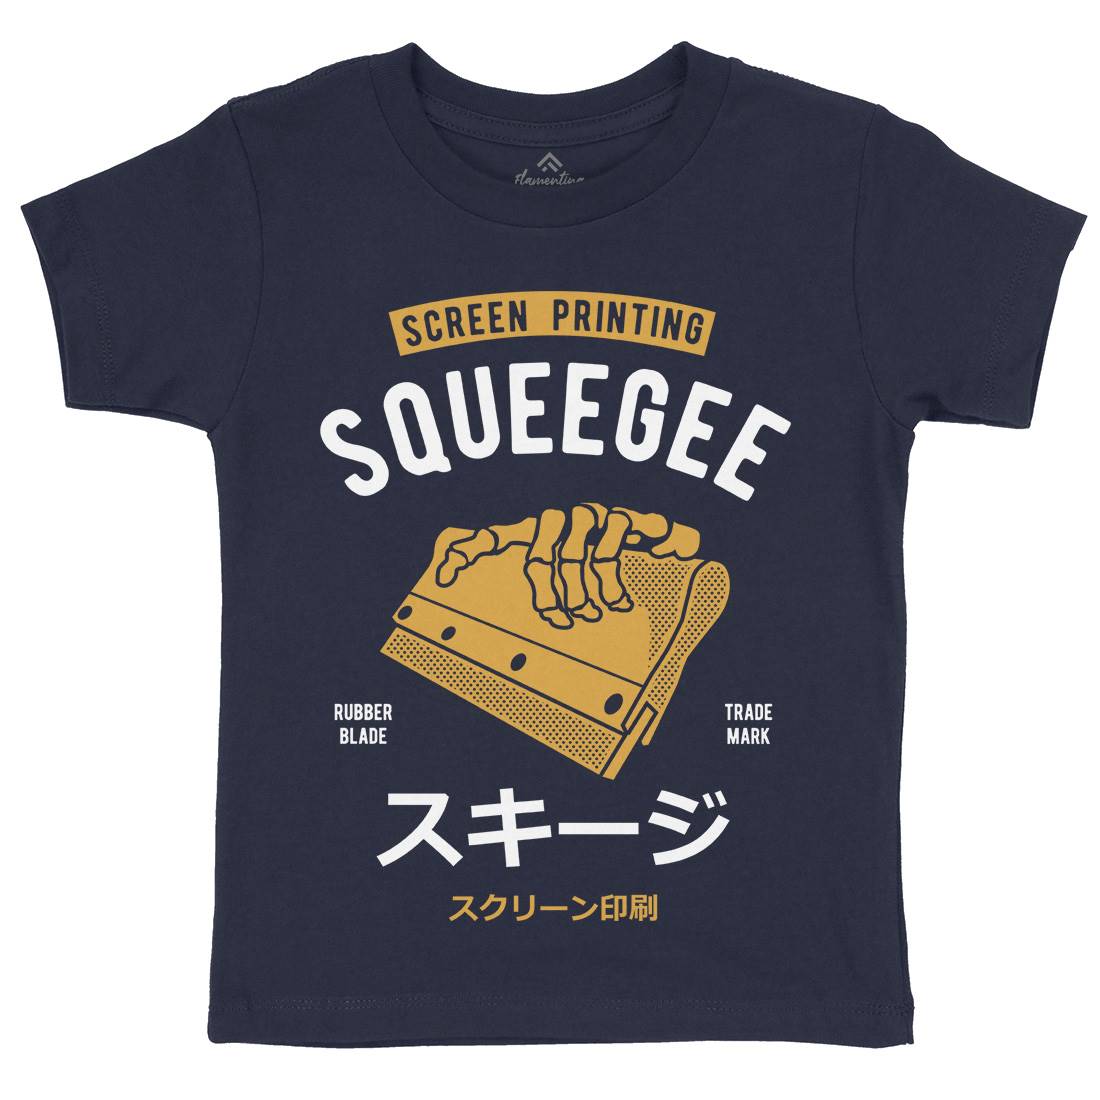 Squeegee Social Club Kids Crew Neck T-Shirt Work A282